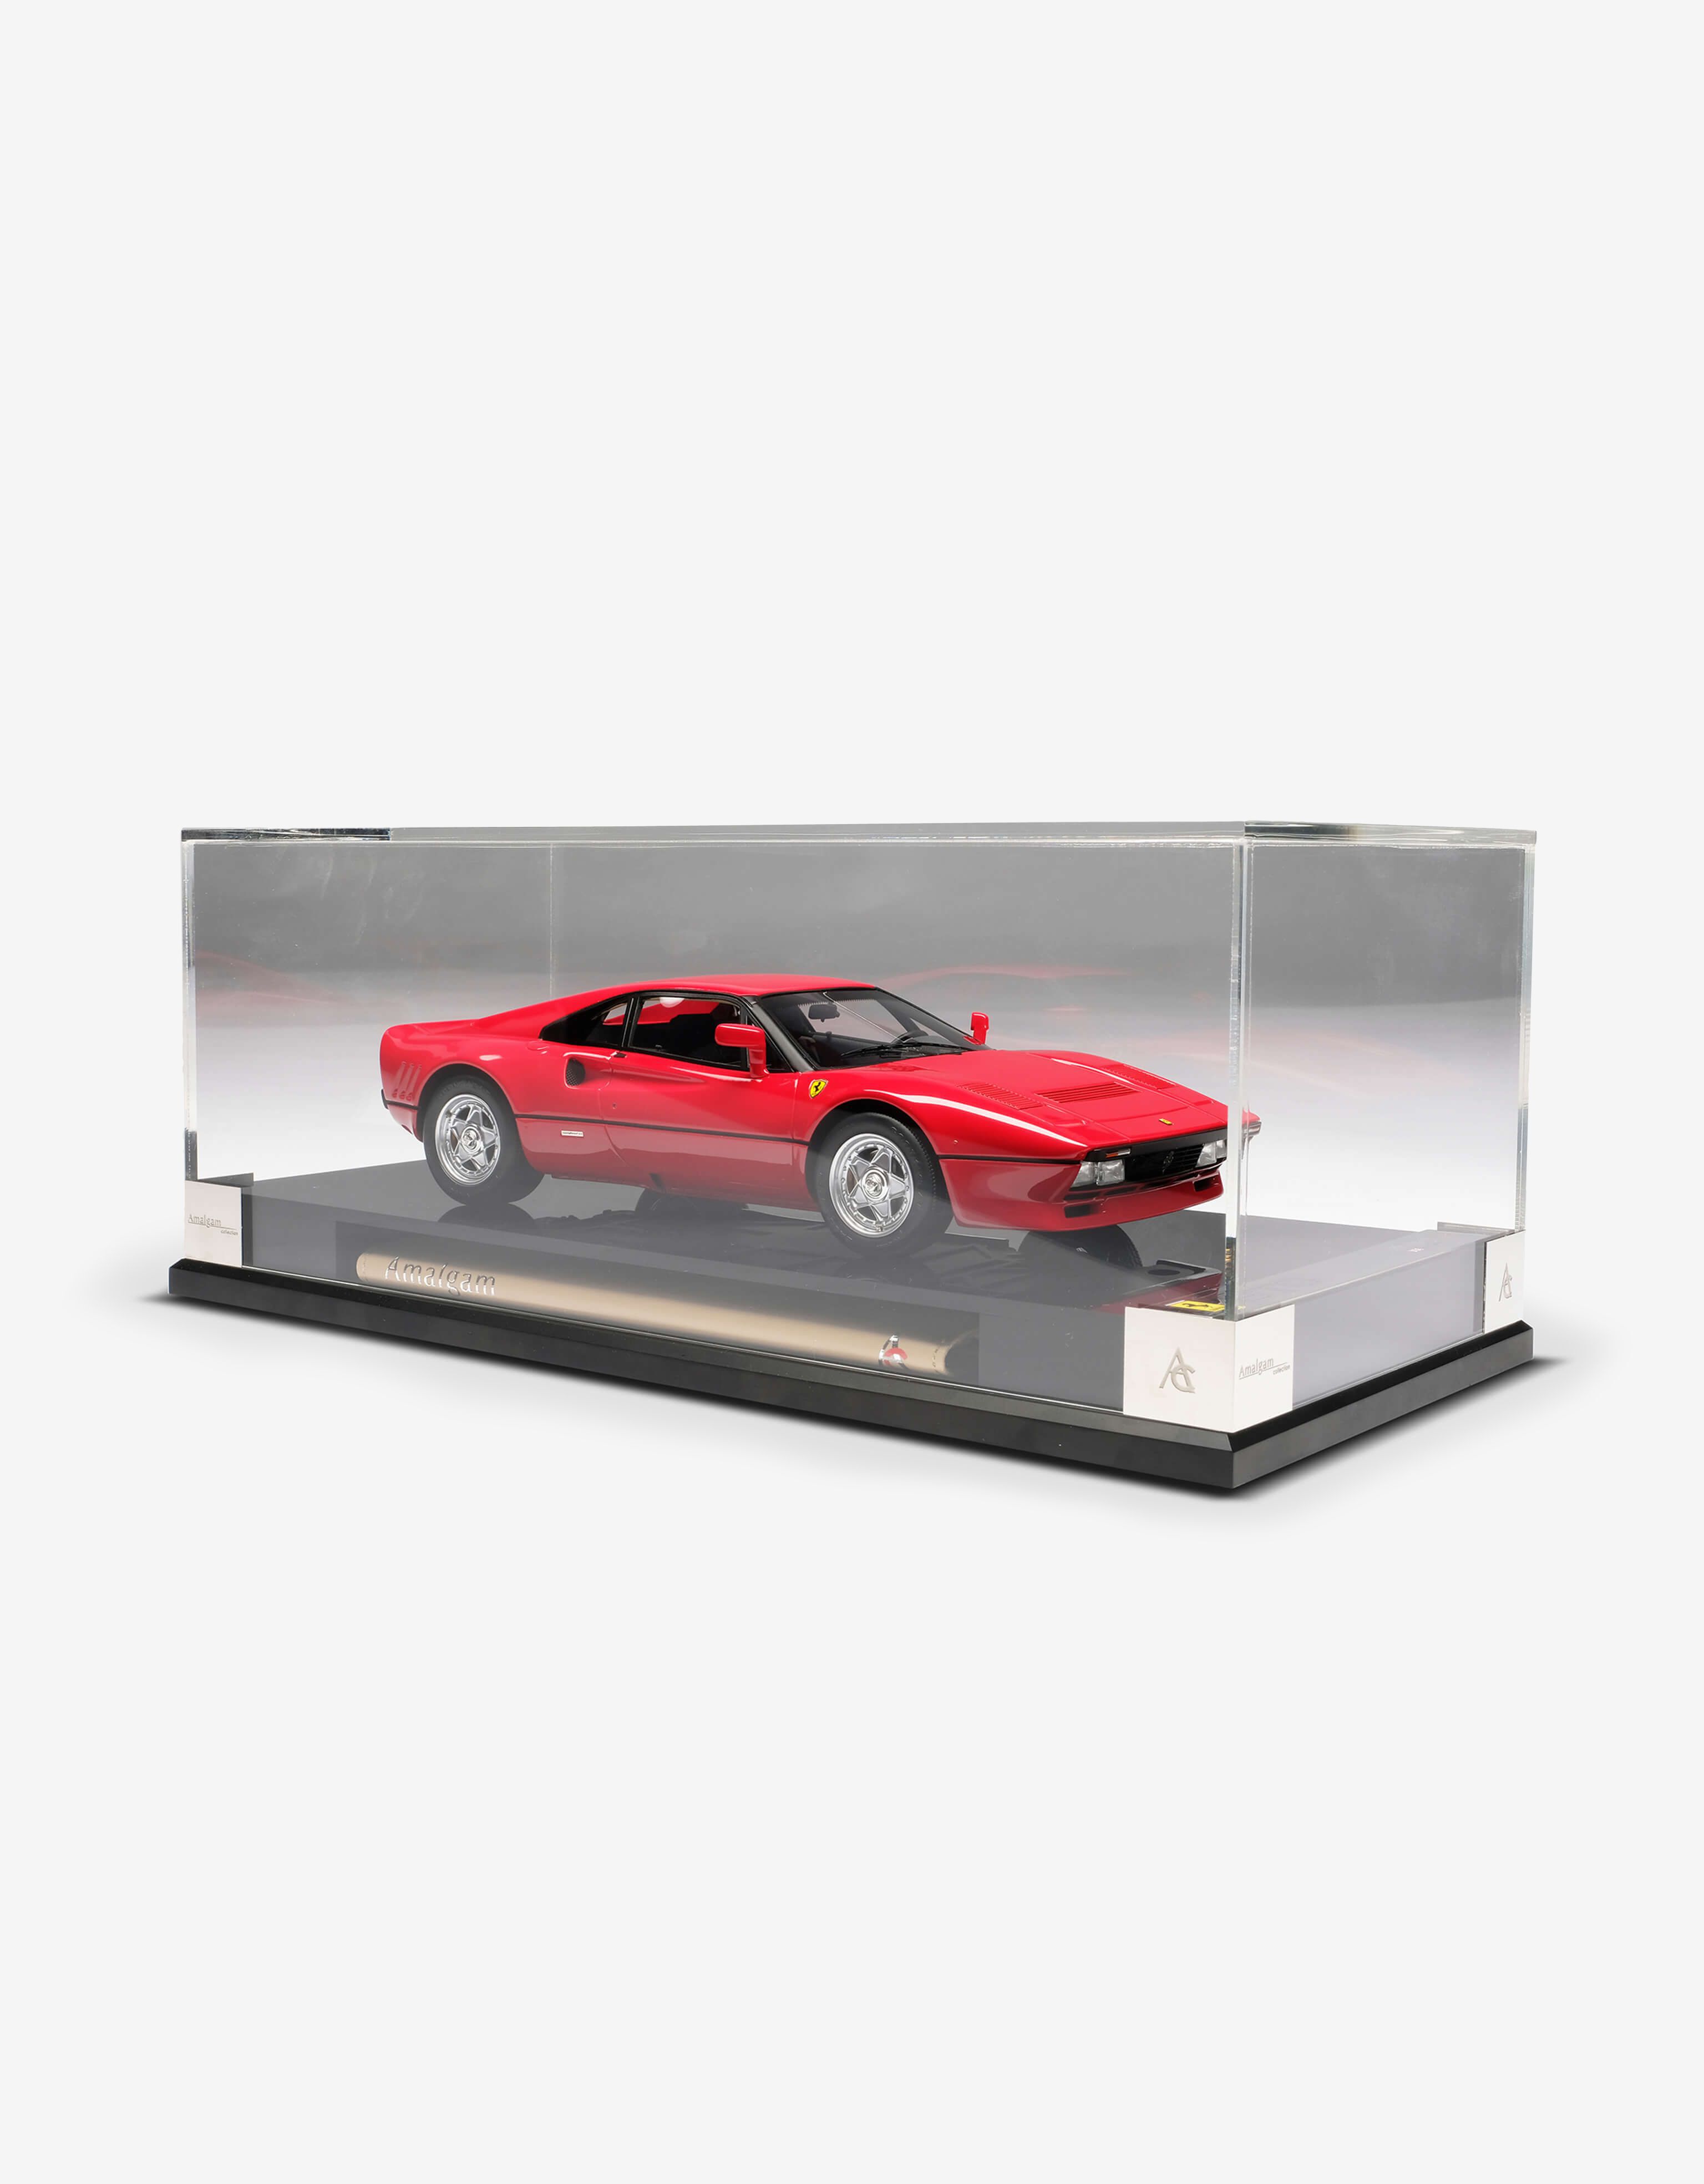 Ferrari 288 GTO Le Mans model in 1:18 scale in Red | Ferrari®